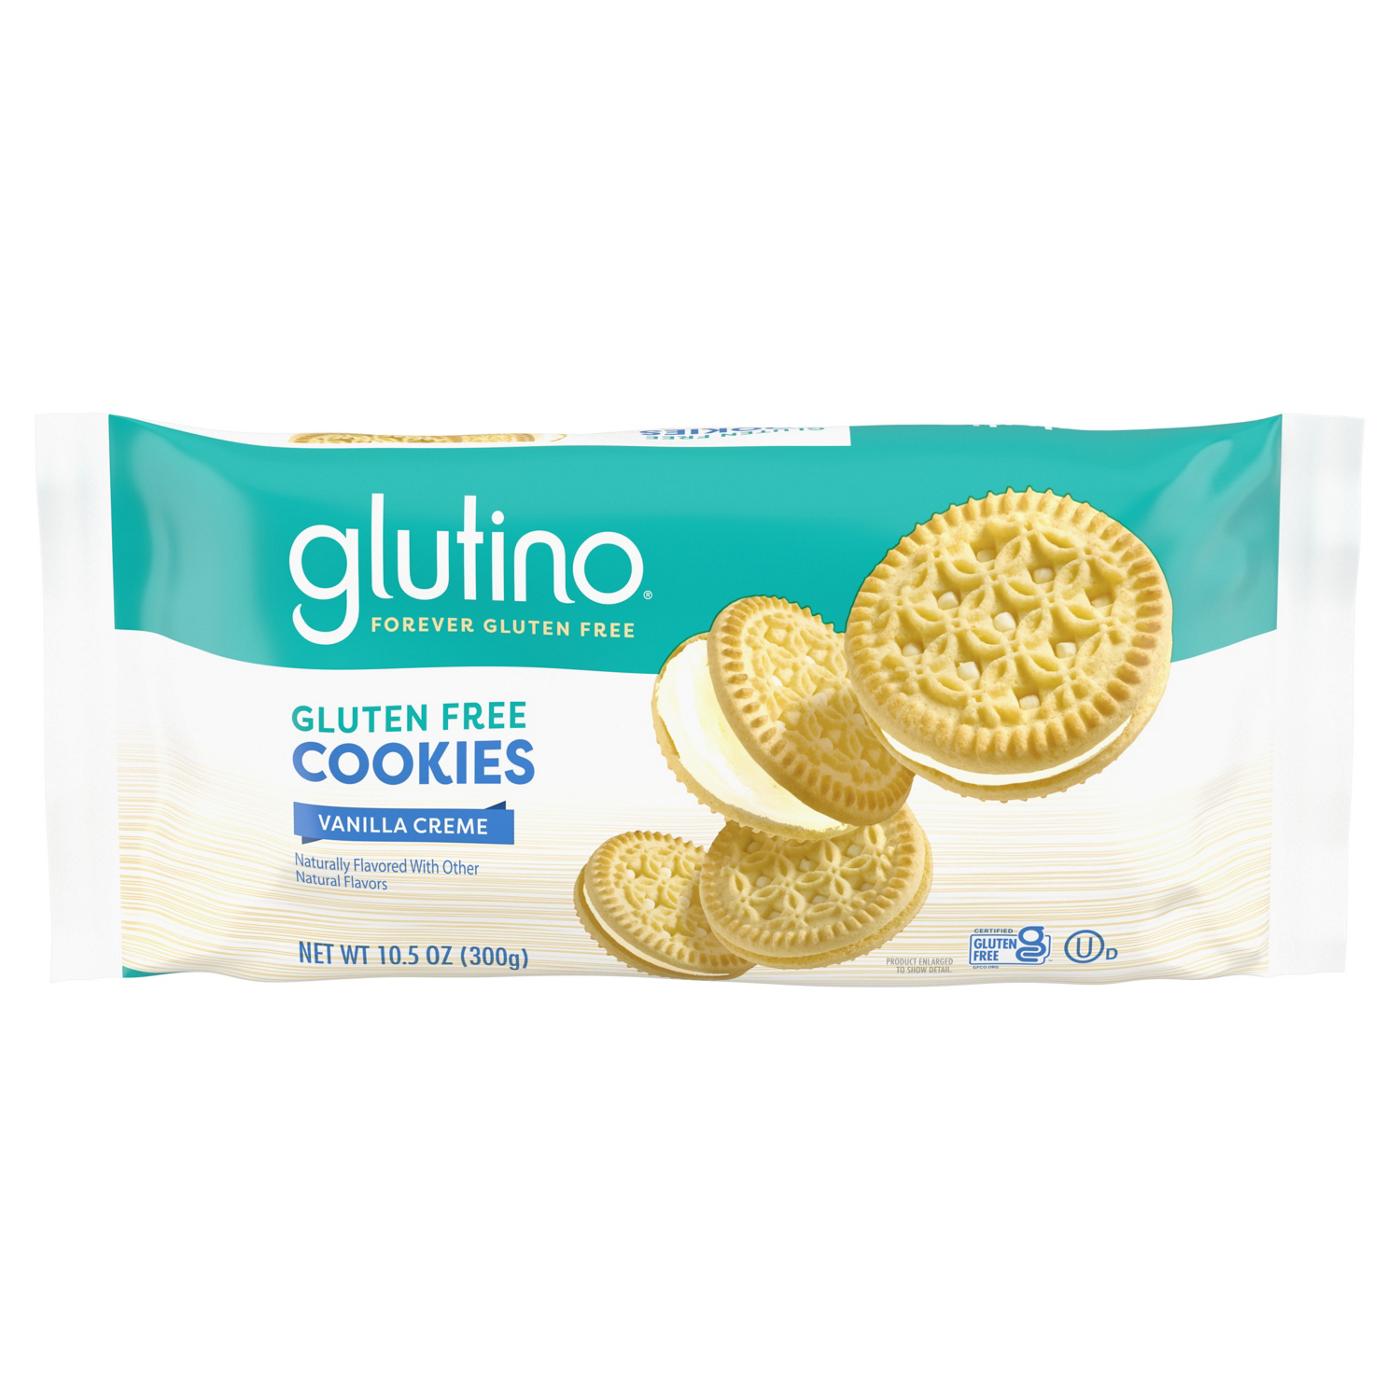 Glutino Gluten Free Vanilla Creme Cookies; image 1 of 4